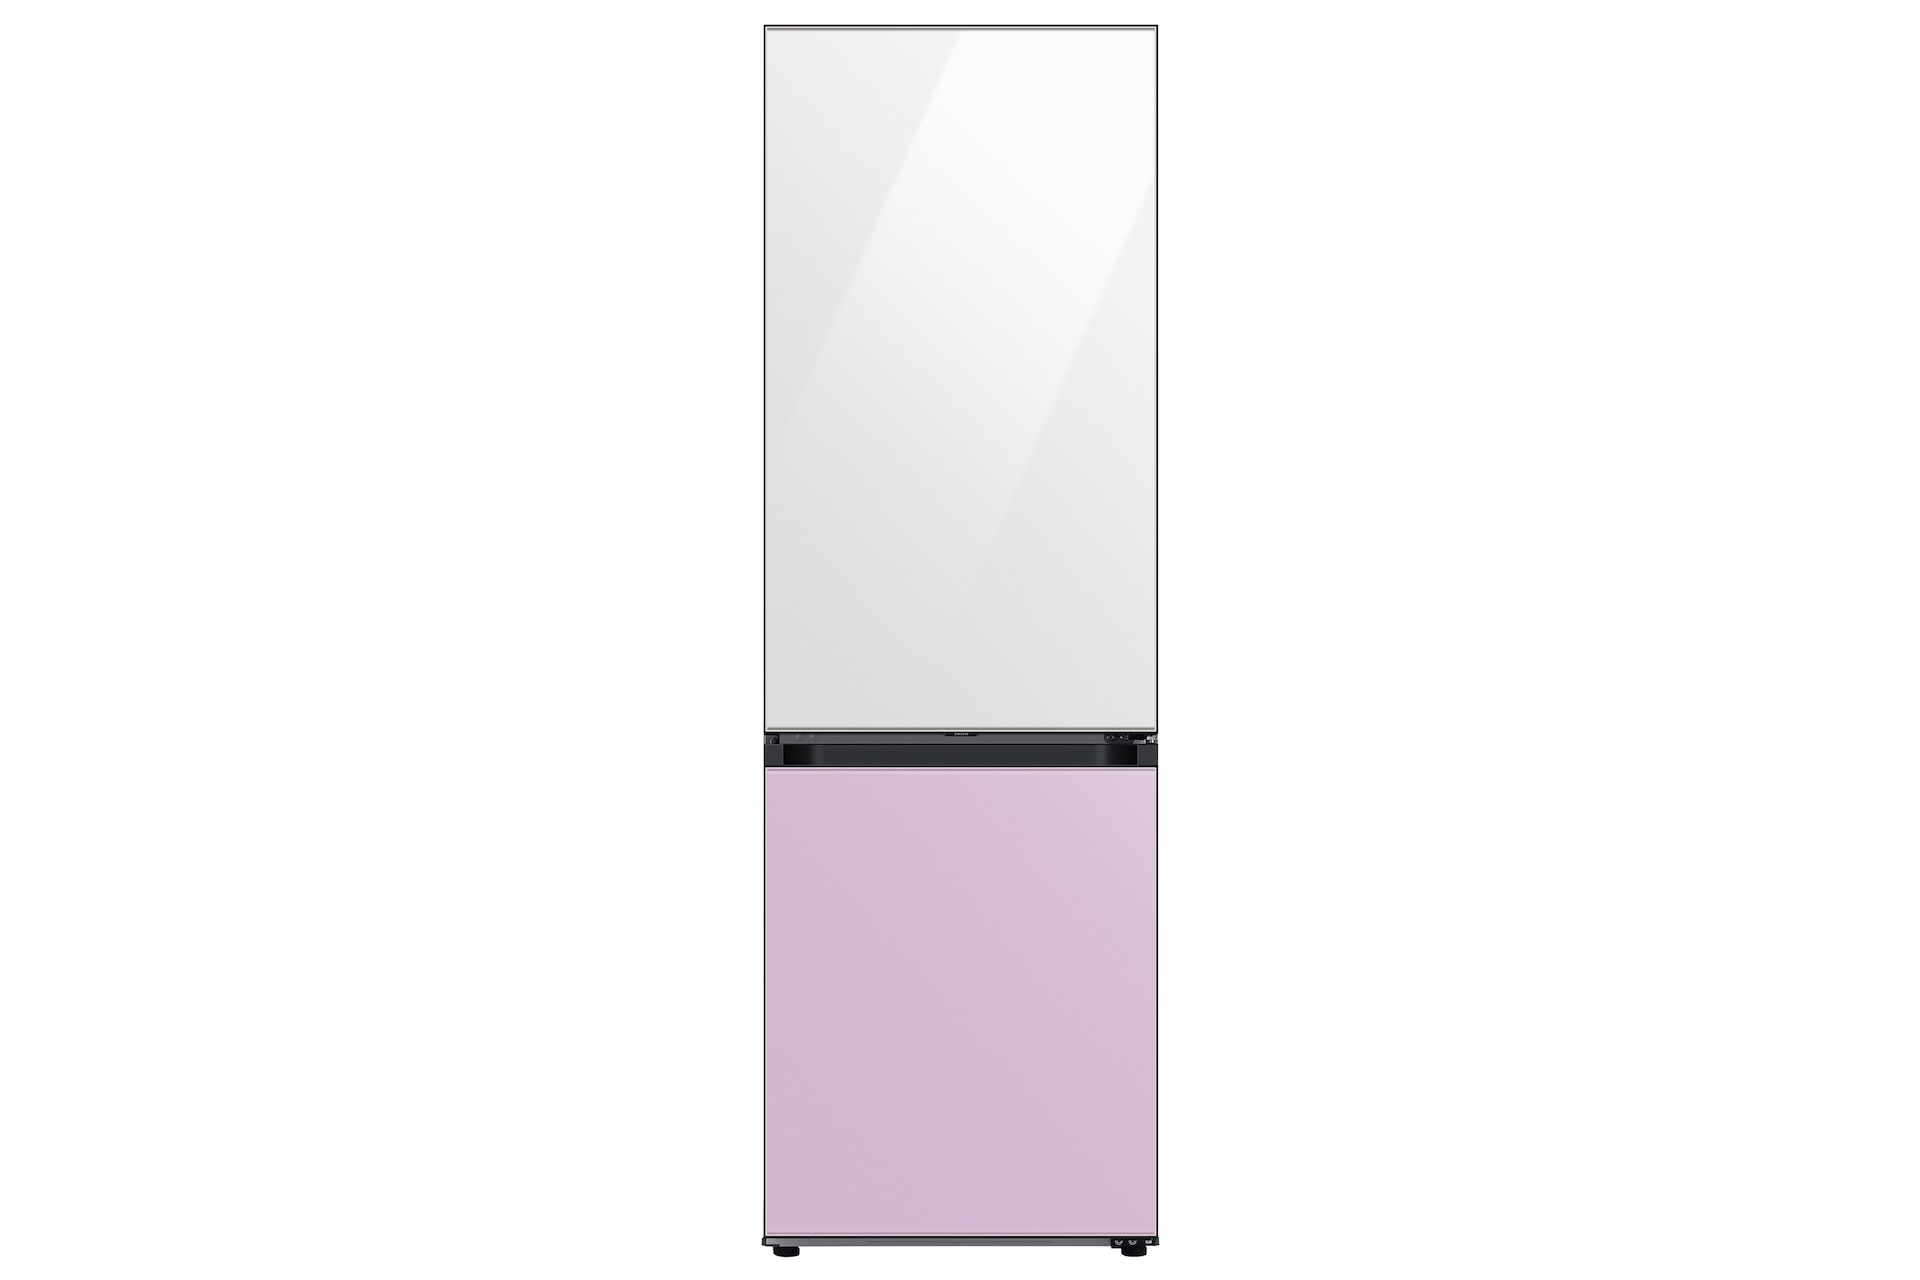 Samsung Frigorifero Combinato BESPOKE 1.85m Clean White - Glam Lavender F-RB34D151238, White